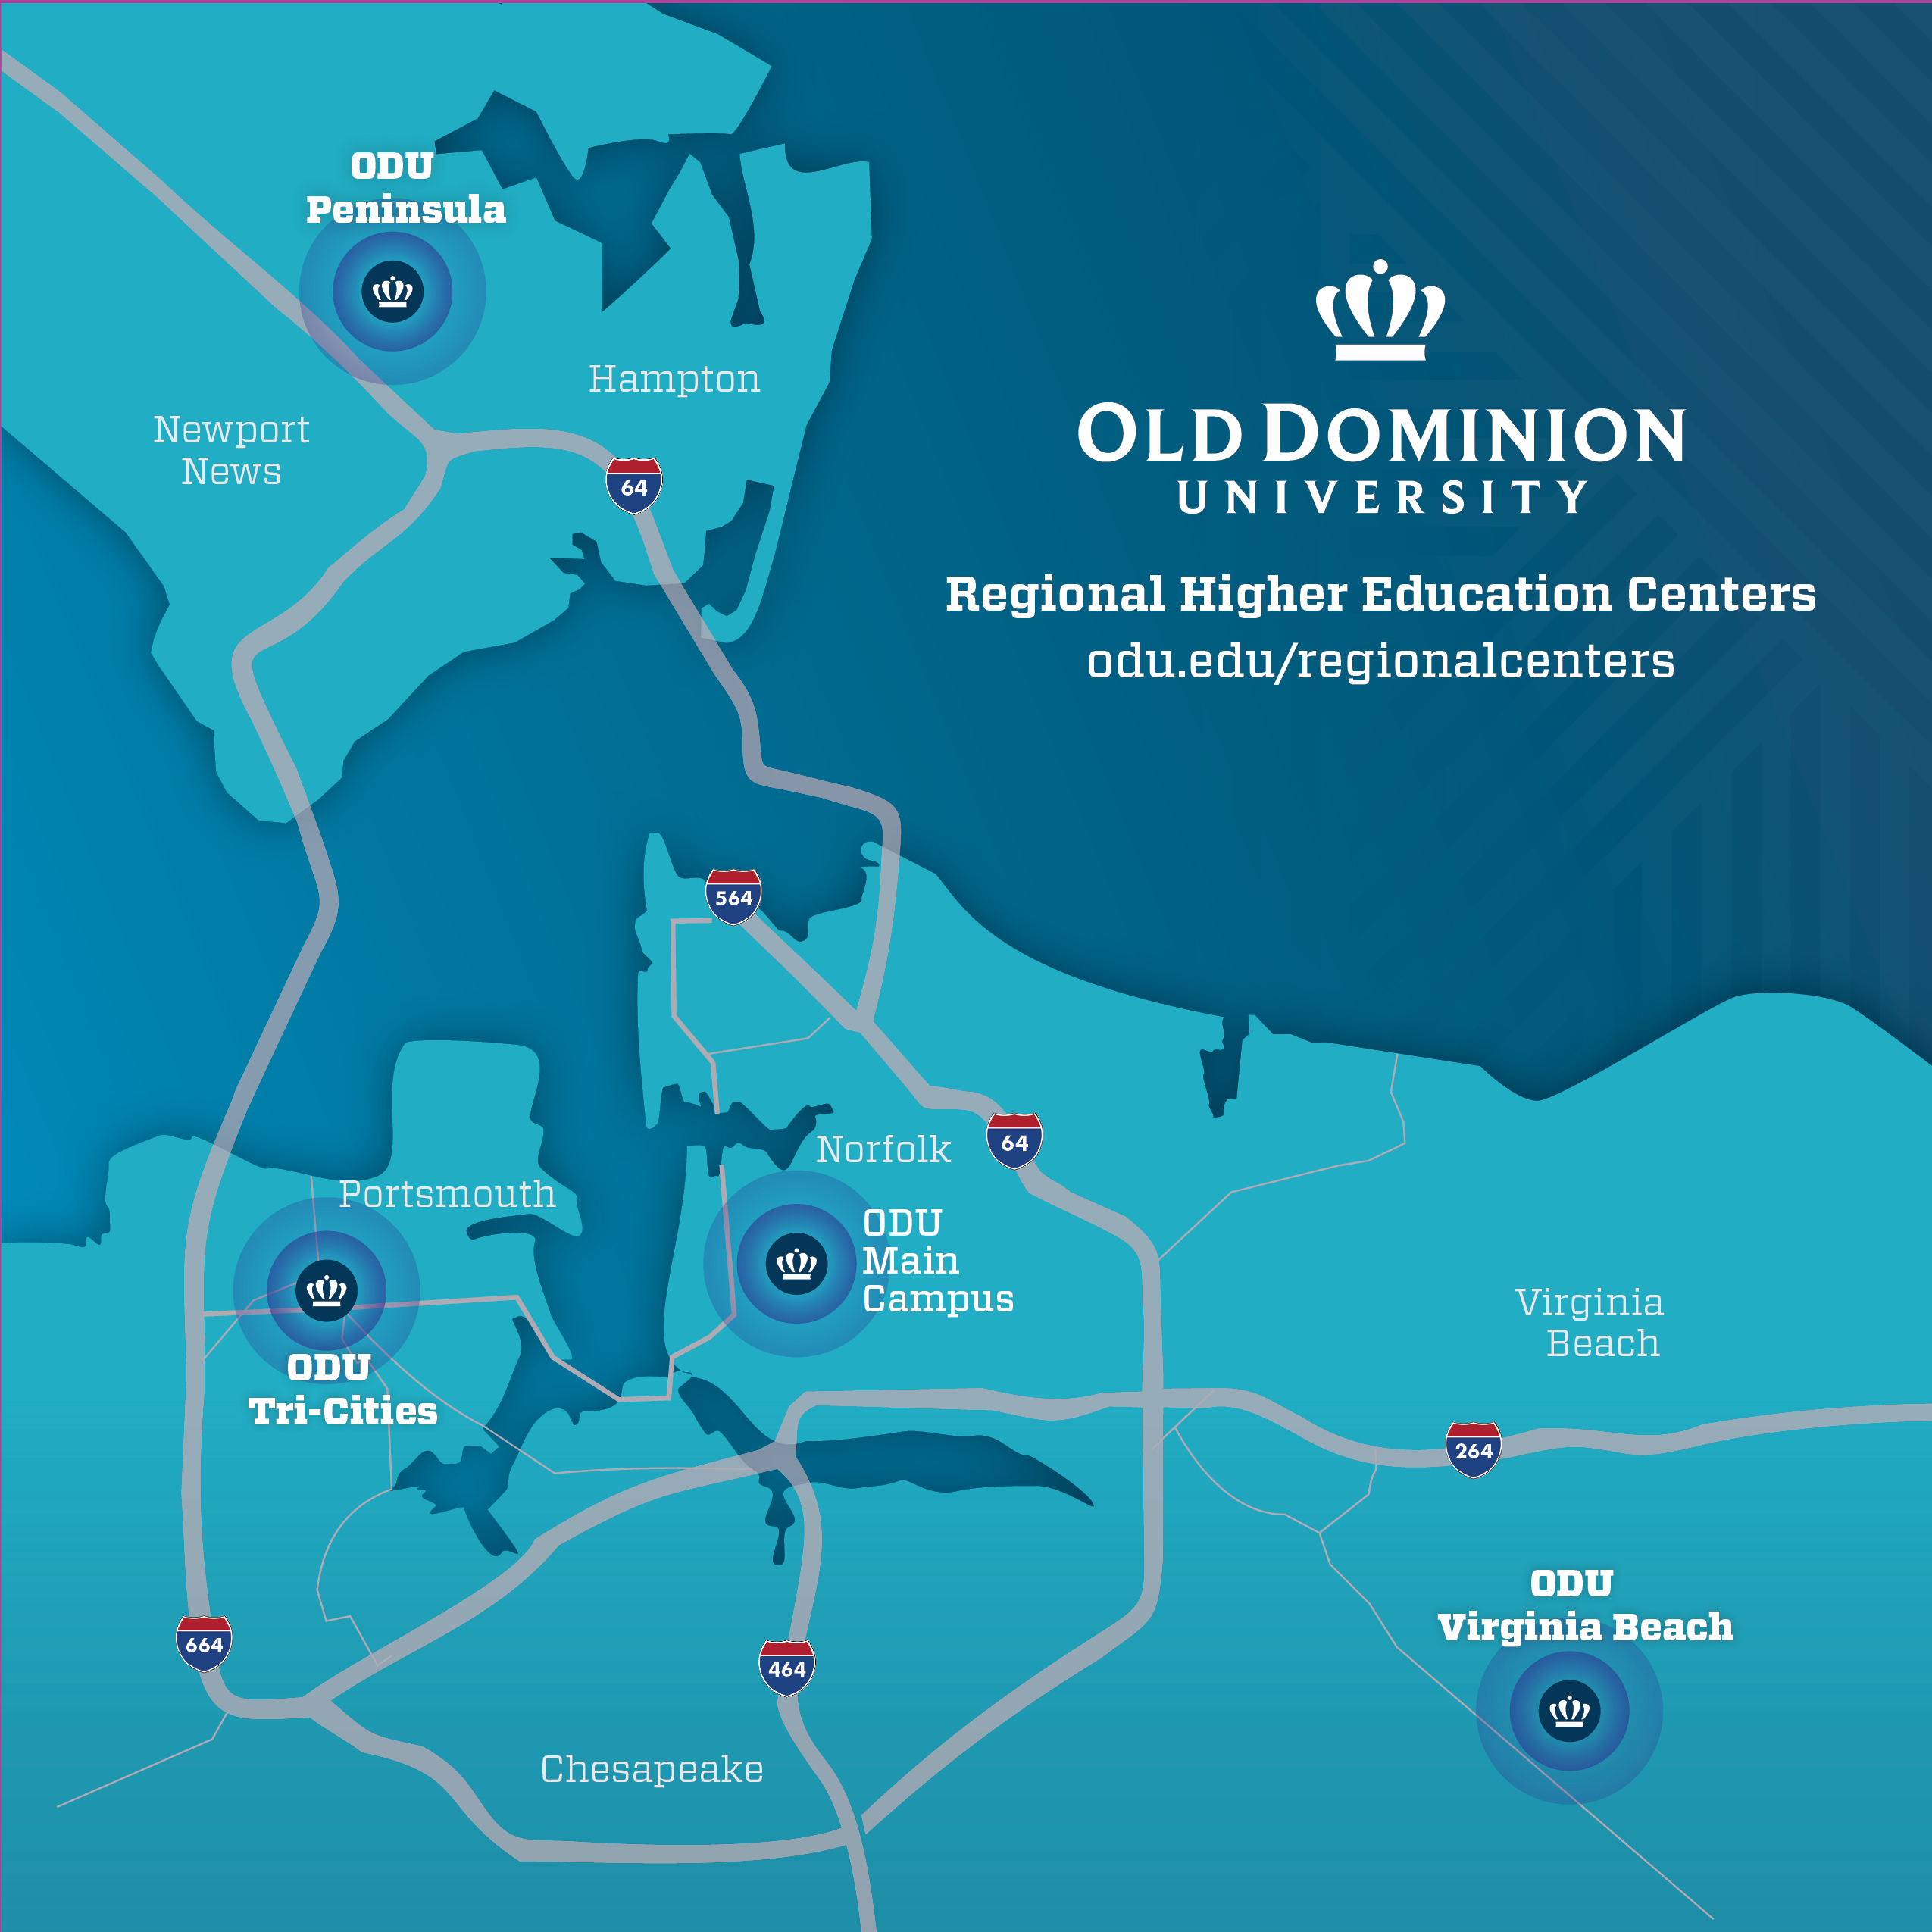 ODU Regional Higher Education Centers map